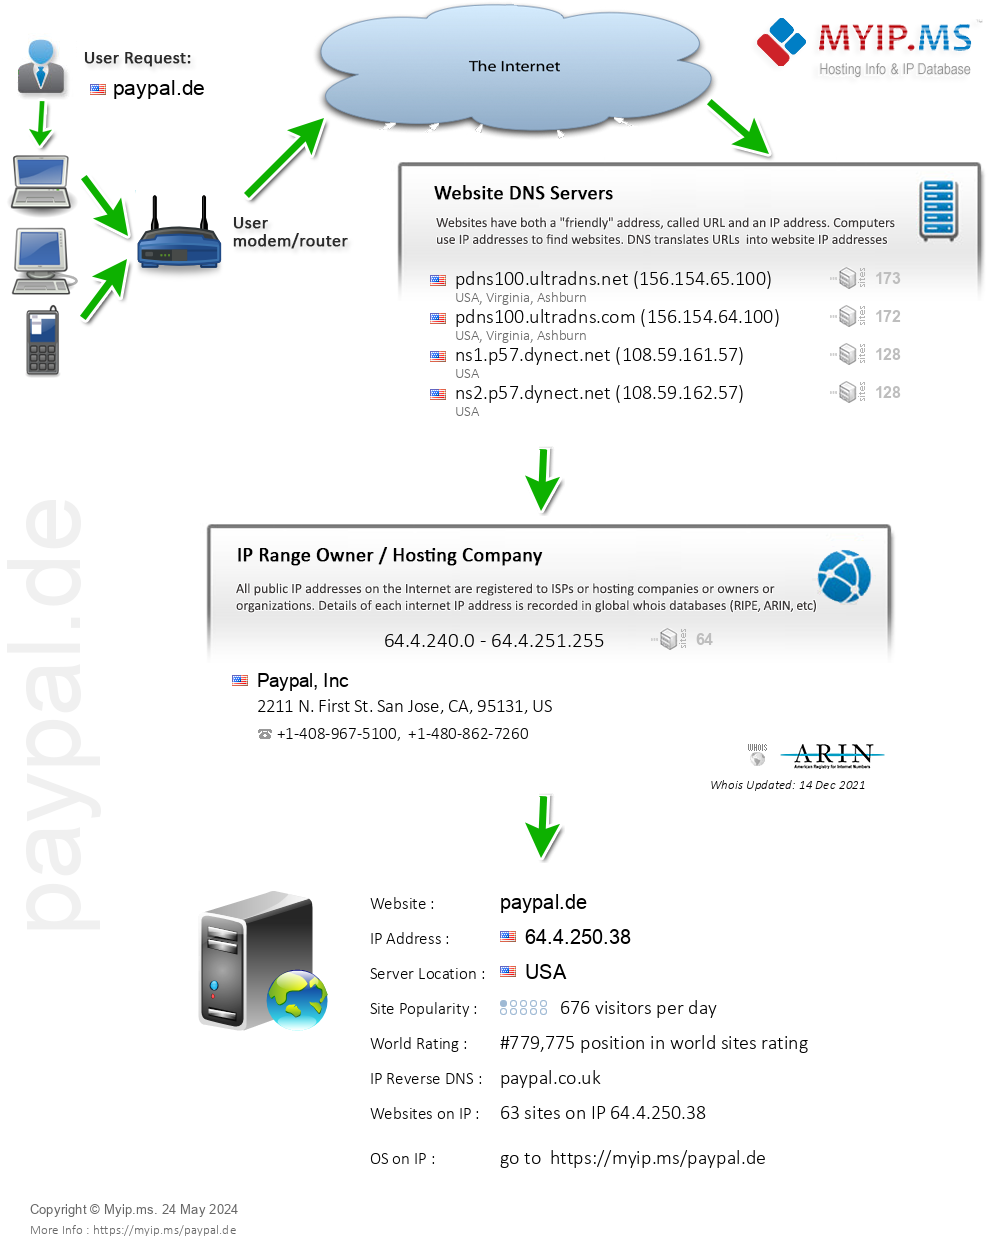 Paypal.de - Website Hosting Visual IP Diagram